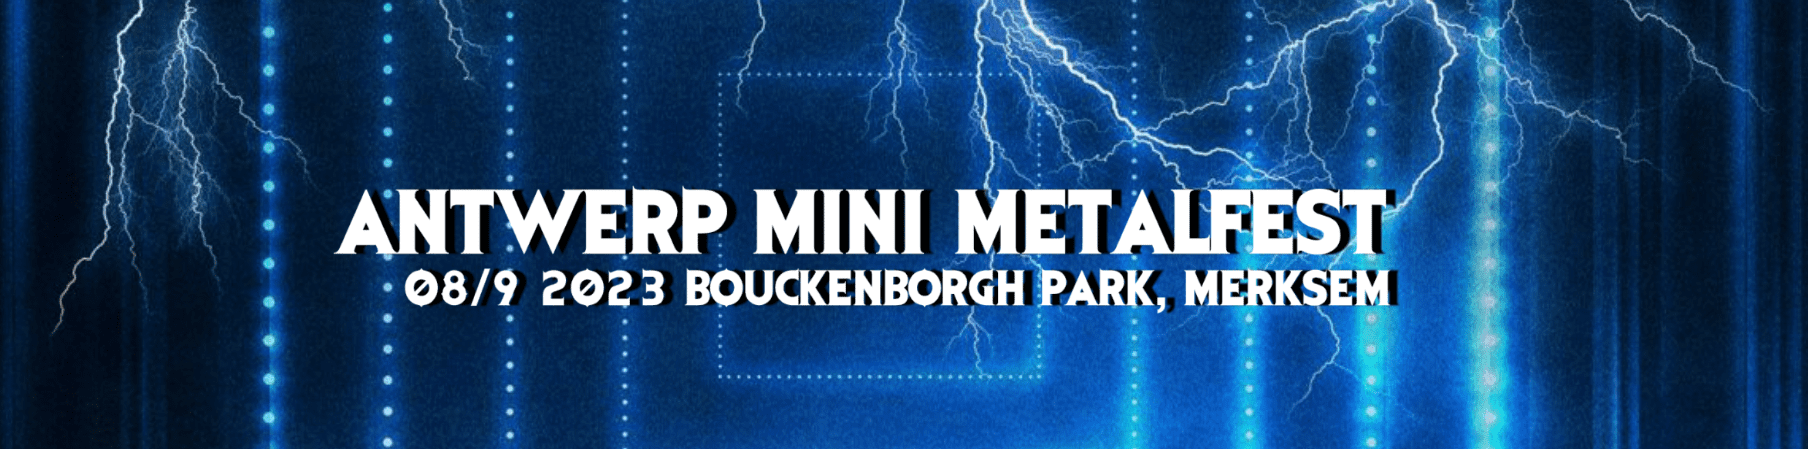 Antwerp Mini MetalFest